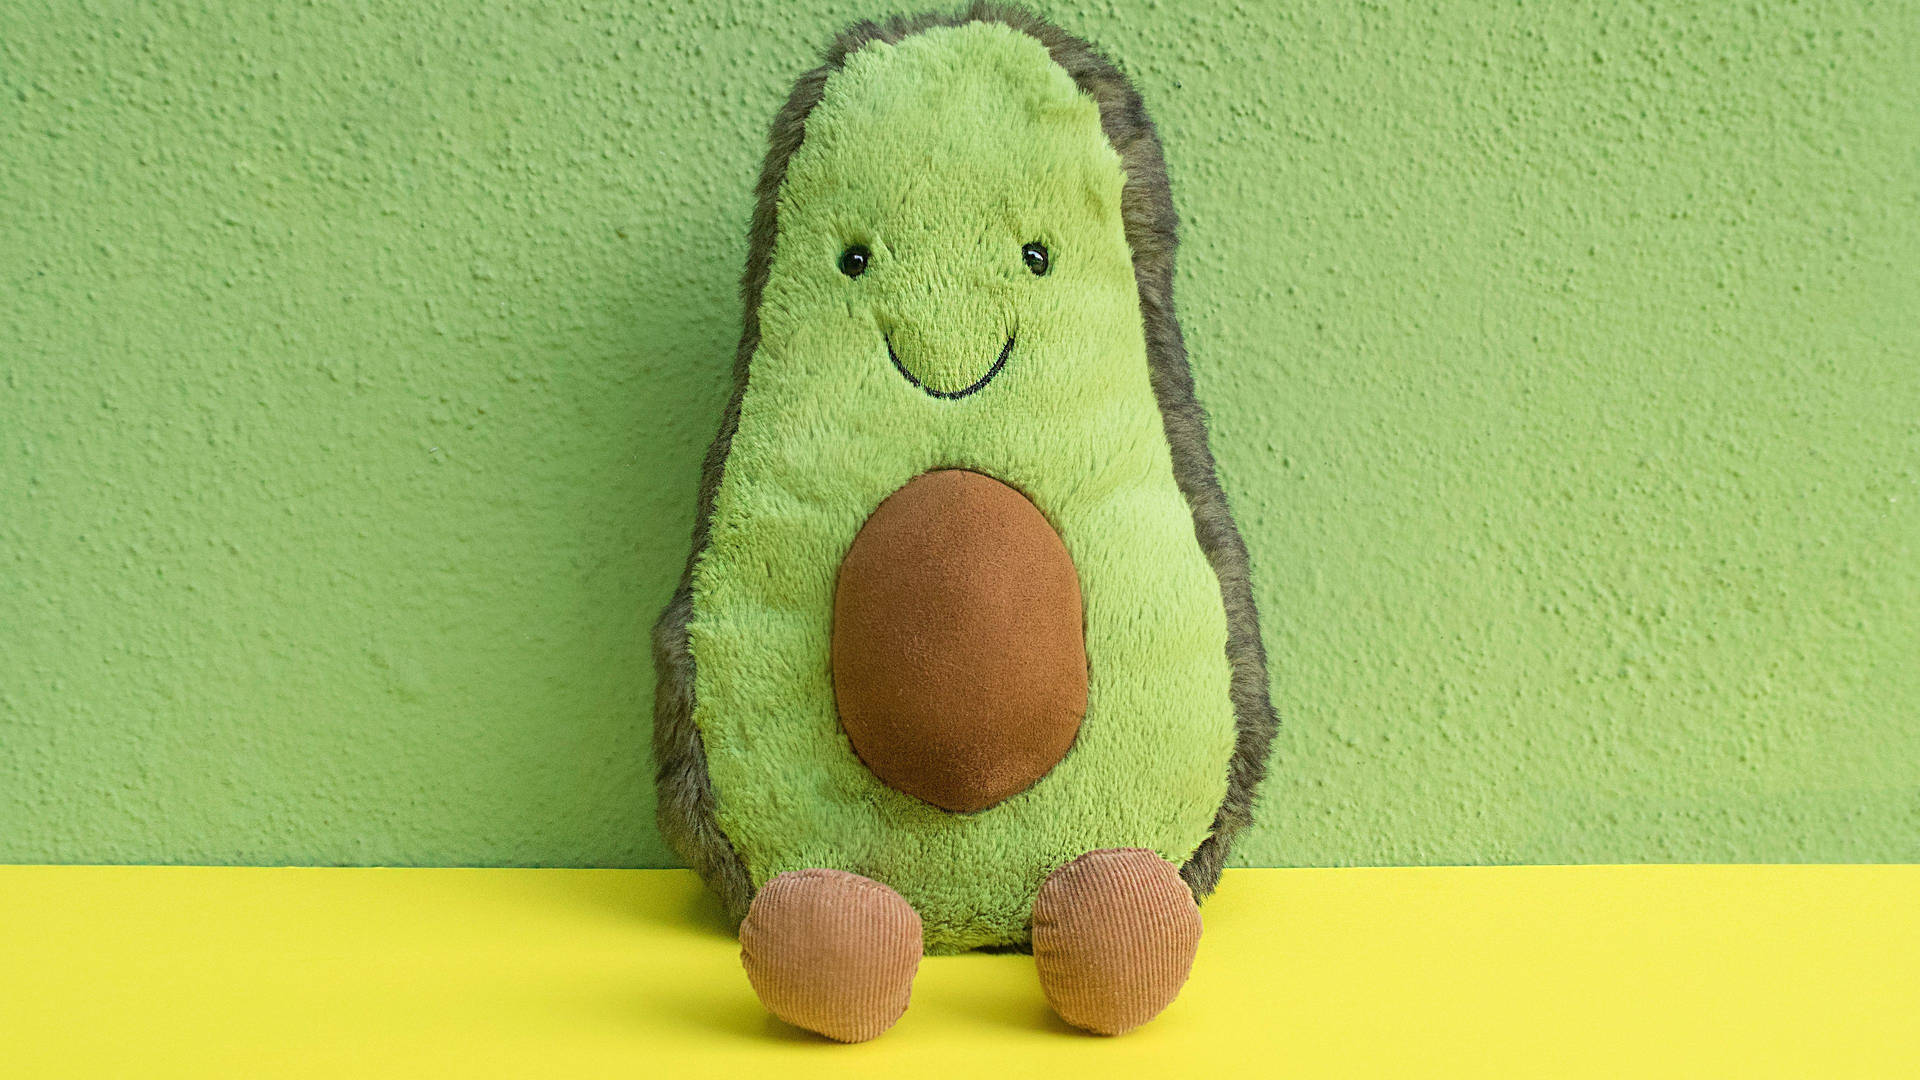 Avocado Stuffed Toy On Pastel Green Background